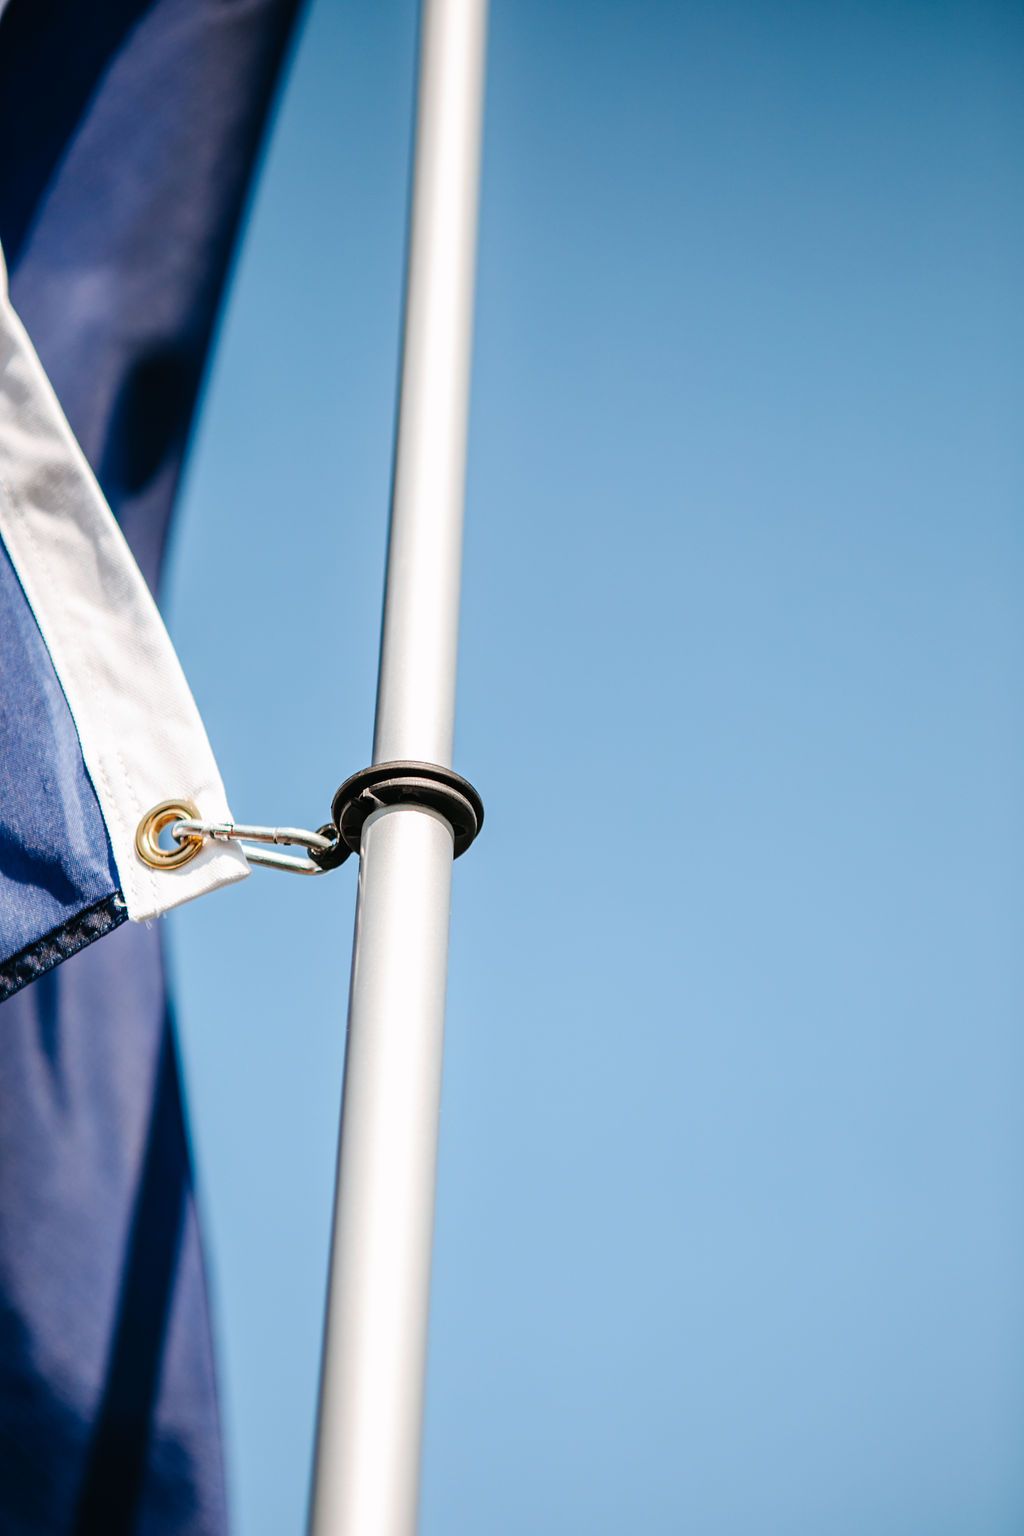 fiberglass flag pole with flag clips